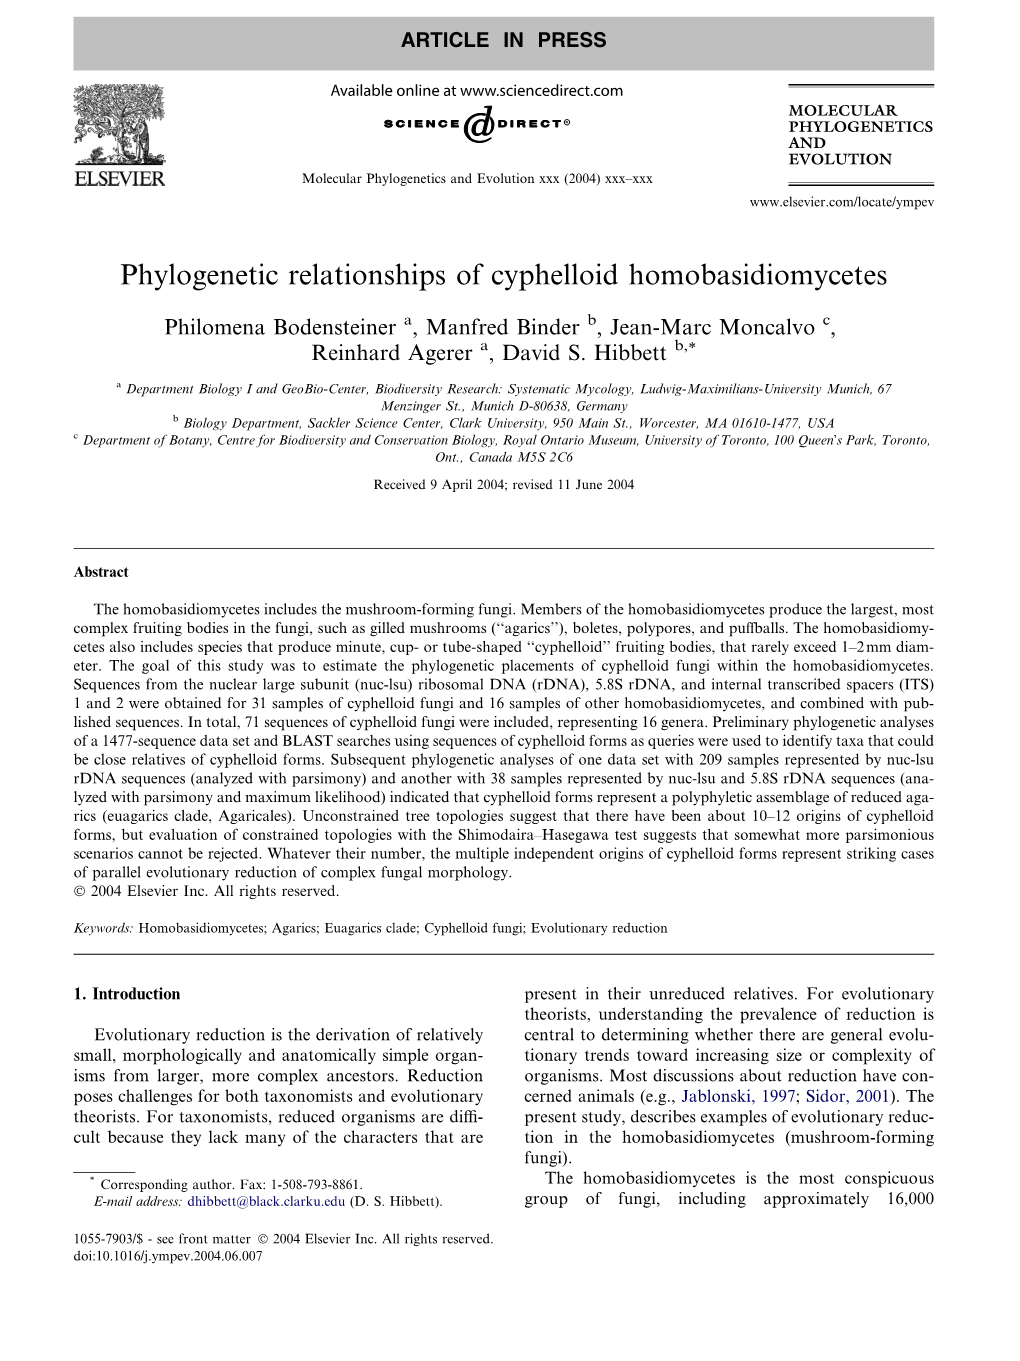 Phylogenetic Relationships of Cyphelloid Homobasidiomycetes